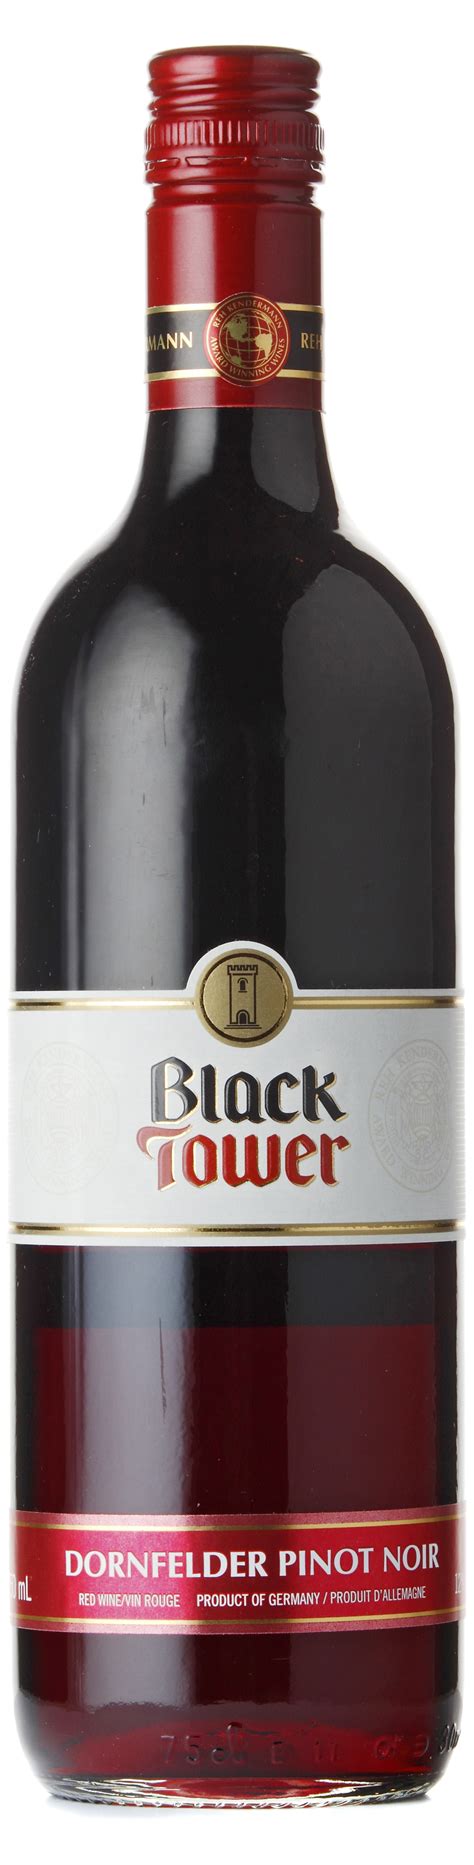 Black Tower Dornfelder Pinot Noir 2011 Expert Wine Ratings And Wine